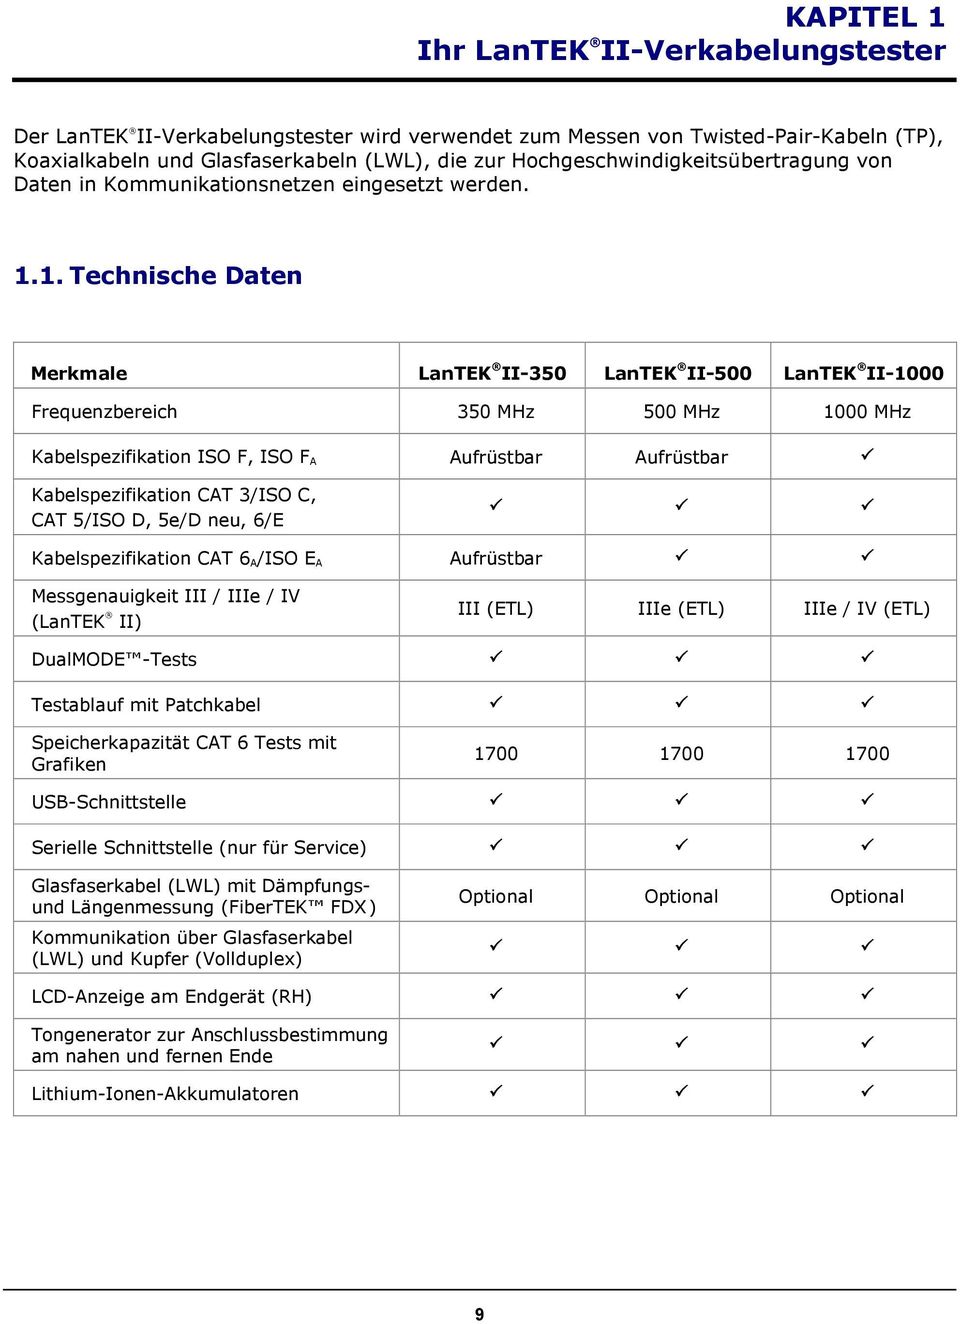 1. Technische Daten Merkmale LanTEK II-350 LanTEK II-500 LanTEK II-1000 Frequenzbereich 350 MHz 500 MHz 1000 MHz Kabelspezifikation ISO F, ISO F A Aufrüstbar Aufrüstbar Kabelspezifikation CAT 3/ISO